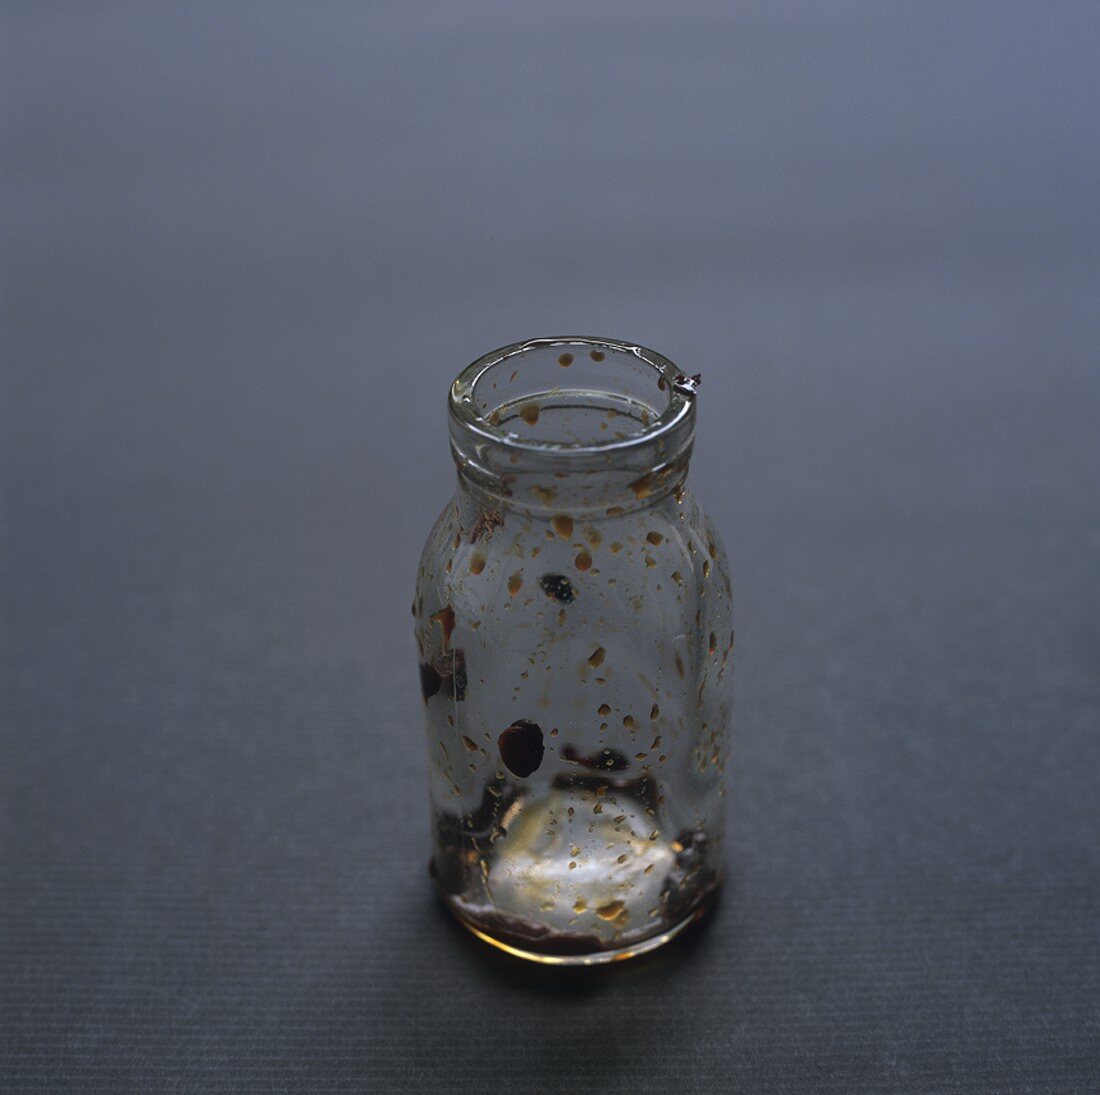 Empty, used bottle